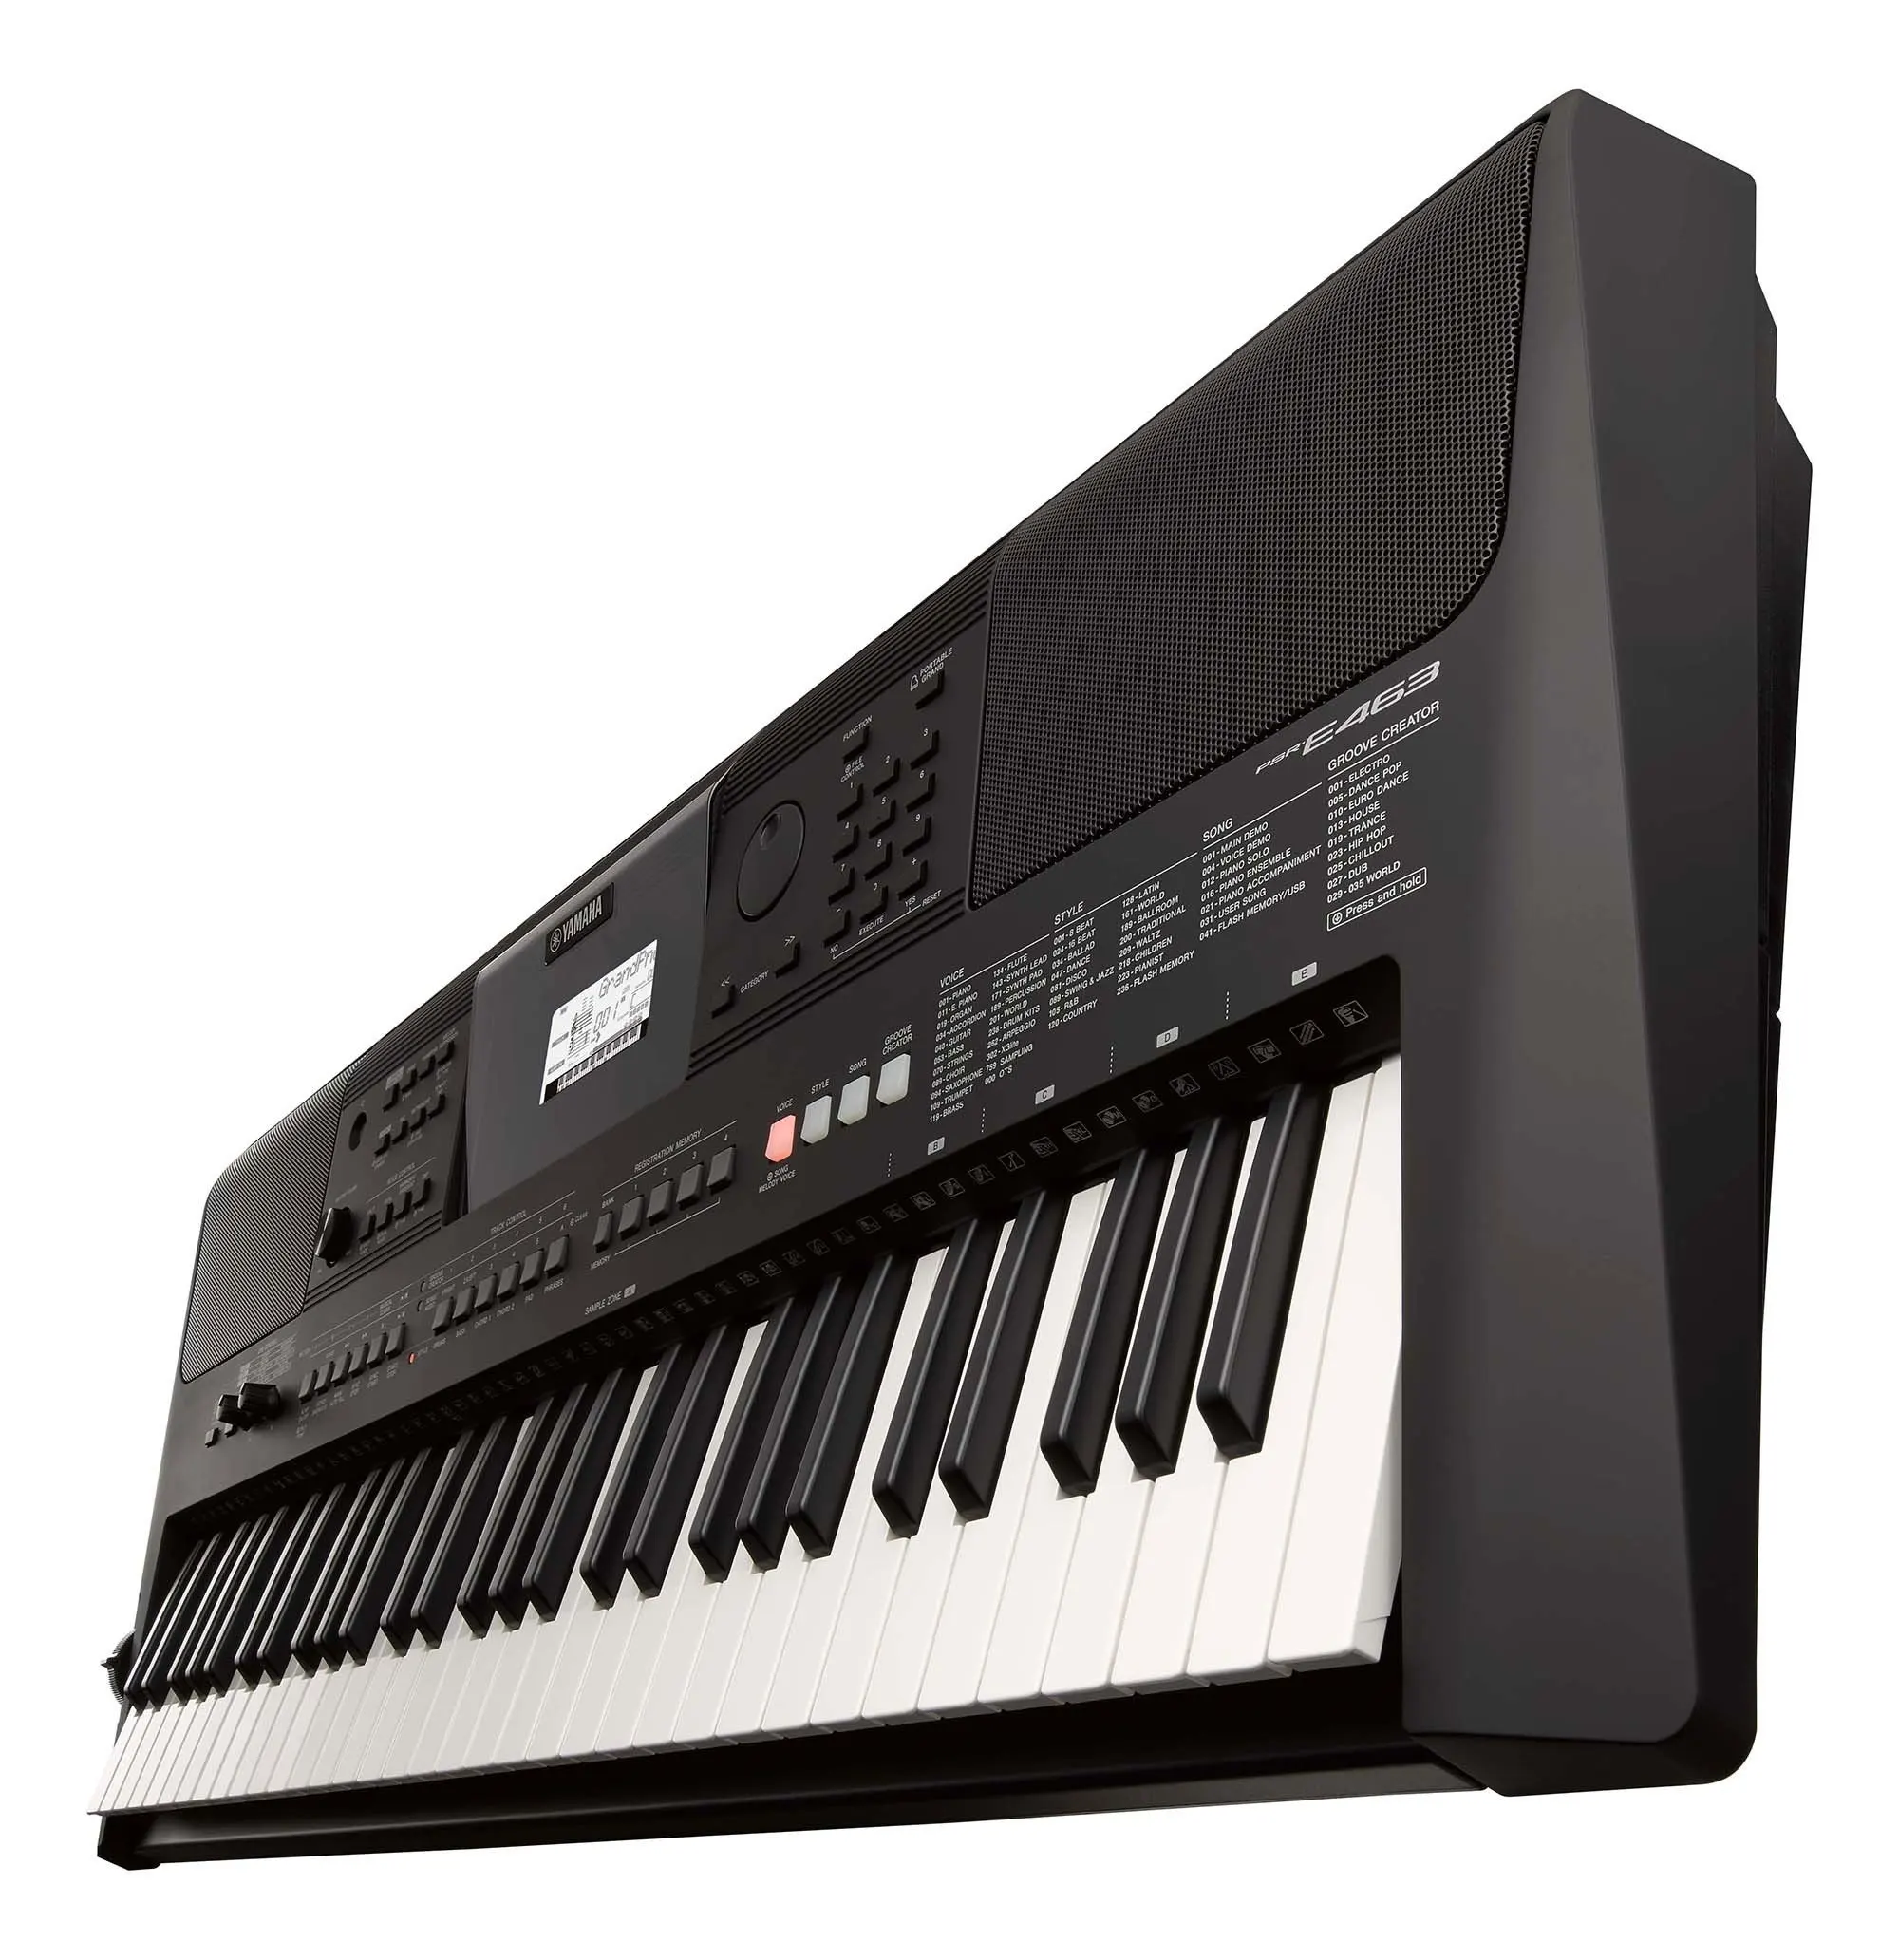 100% Original Yamahas PSR E463 portable 61 keys digital electronic organ keyboard musical instrument